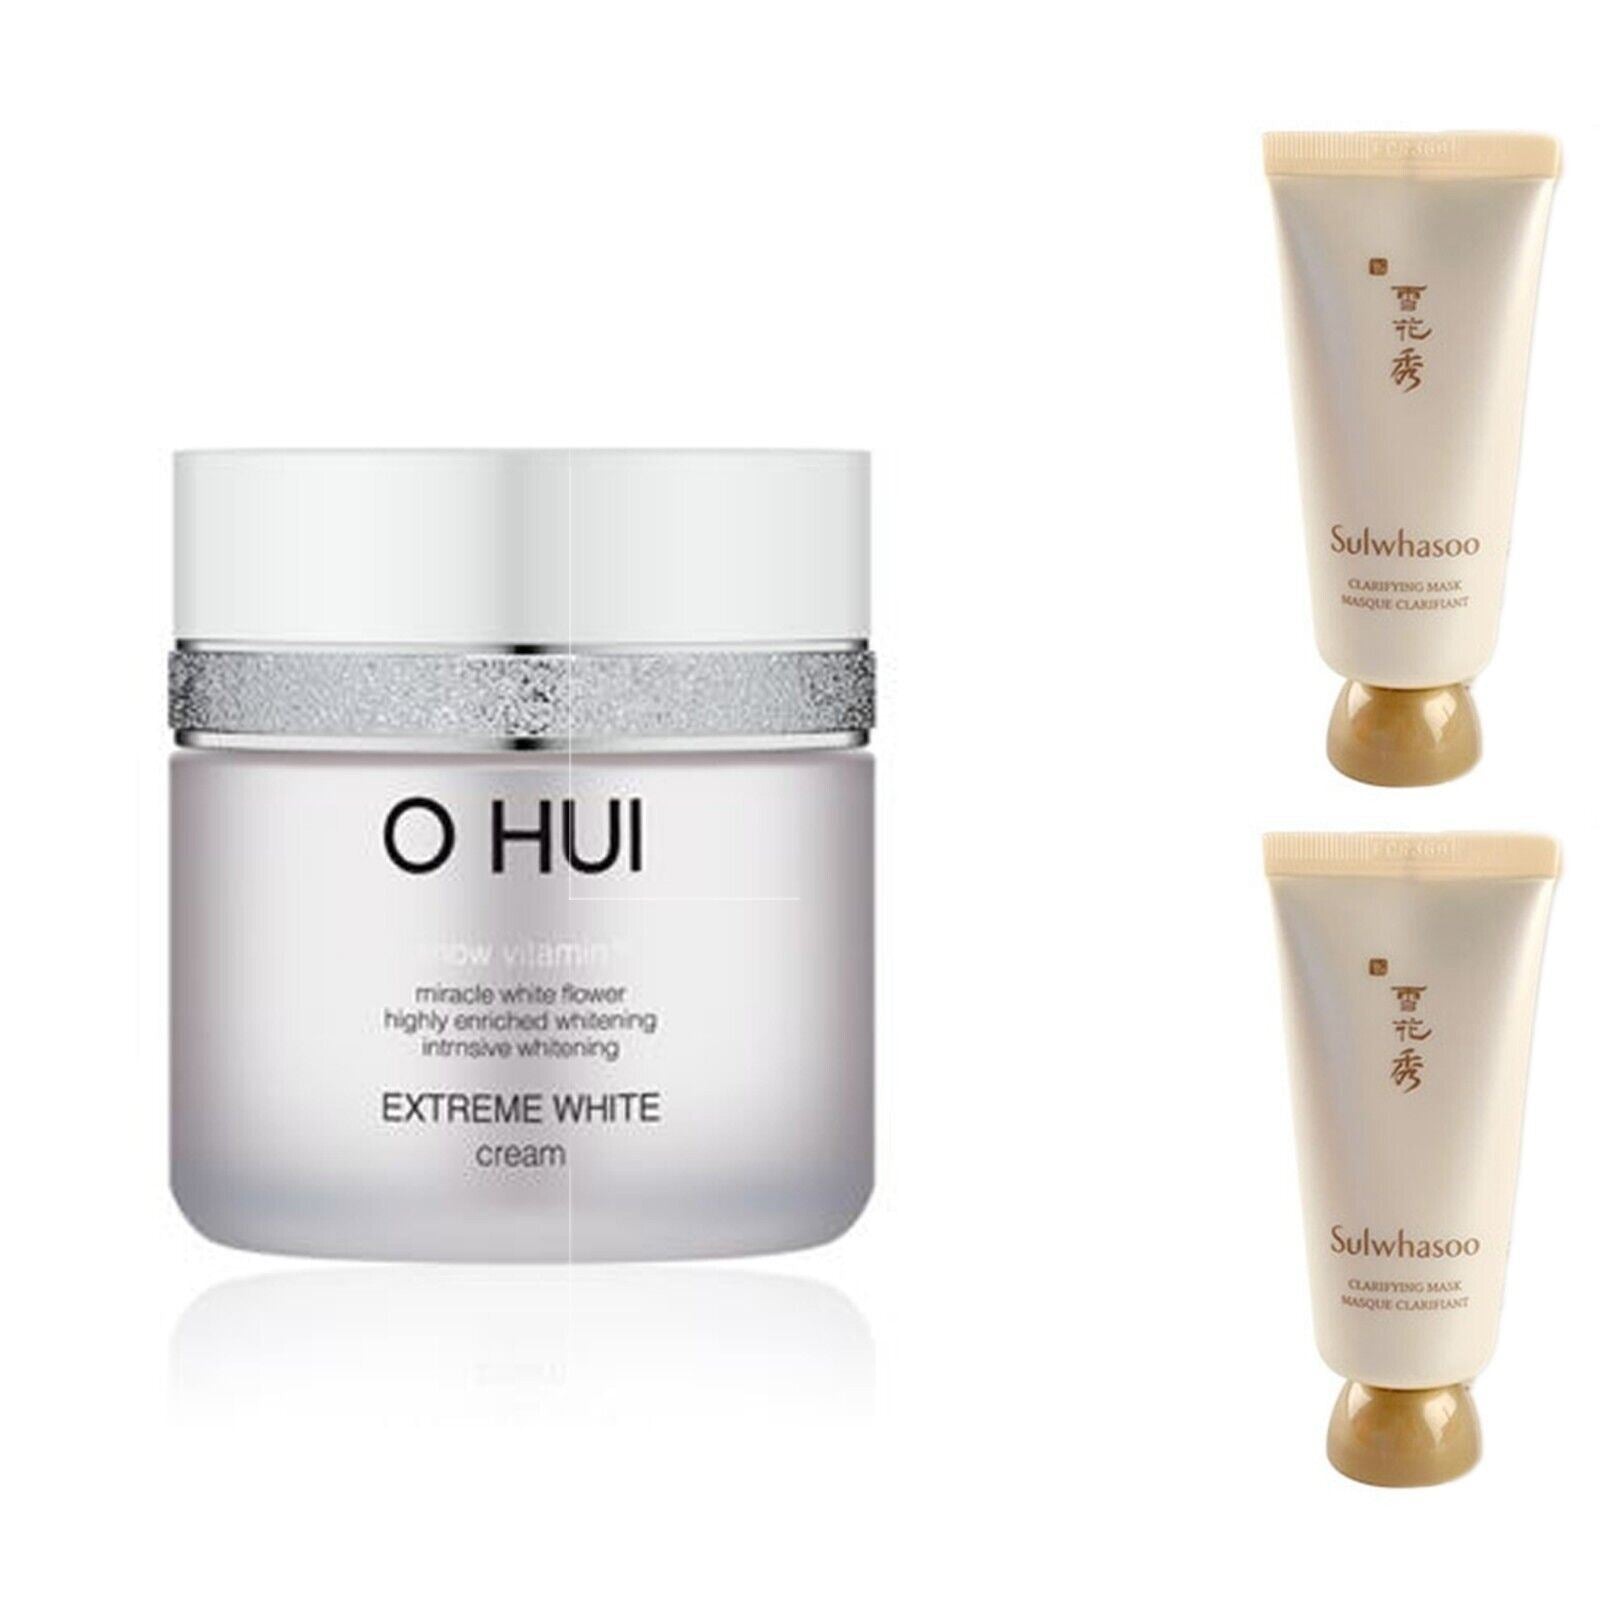 OHUI Extreme White Cream50ml/Dark Spots+Sulwhasoo Clarifying/Overnight Masks/O HUI